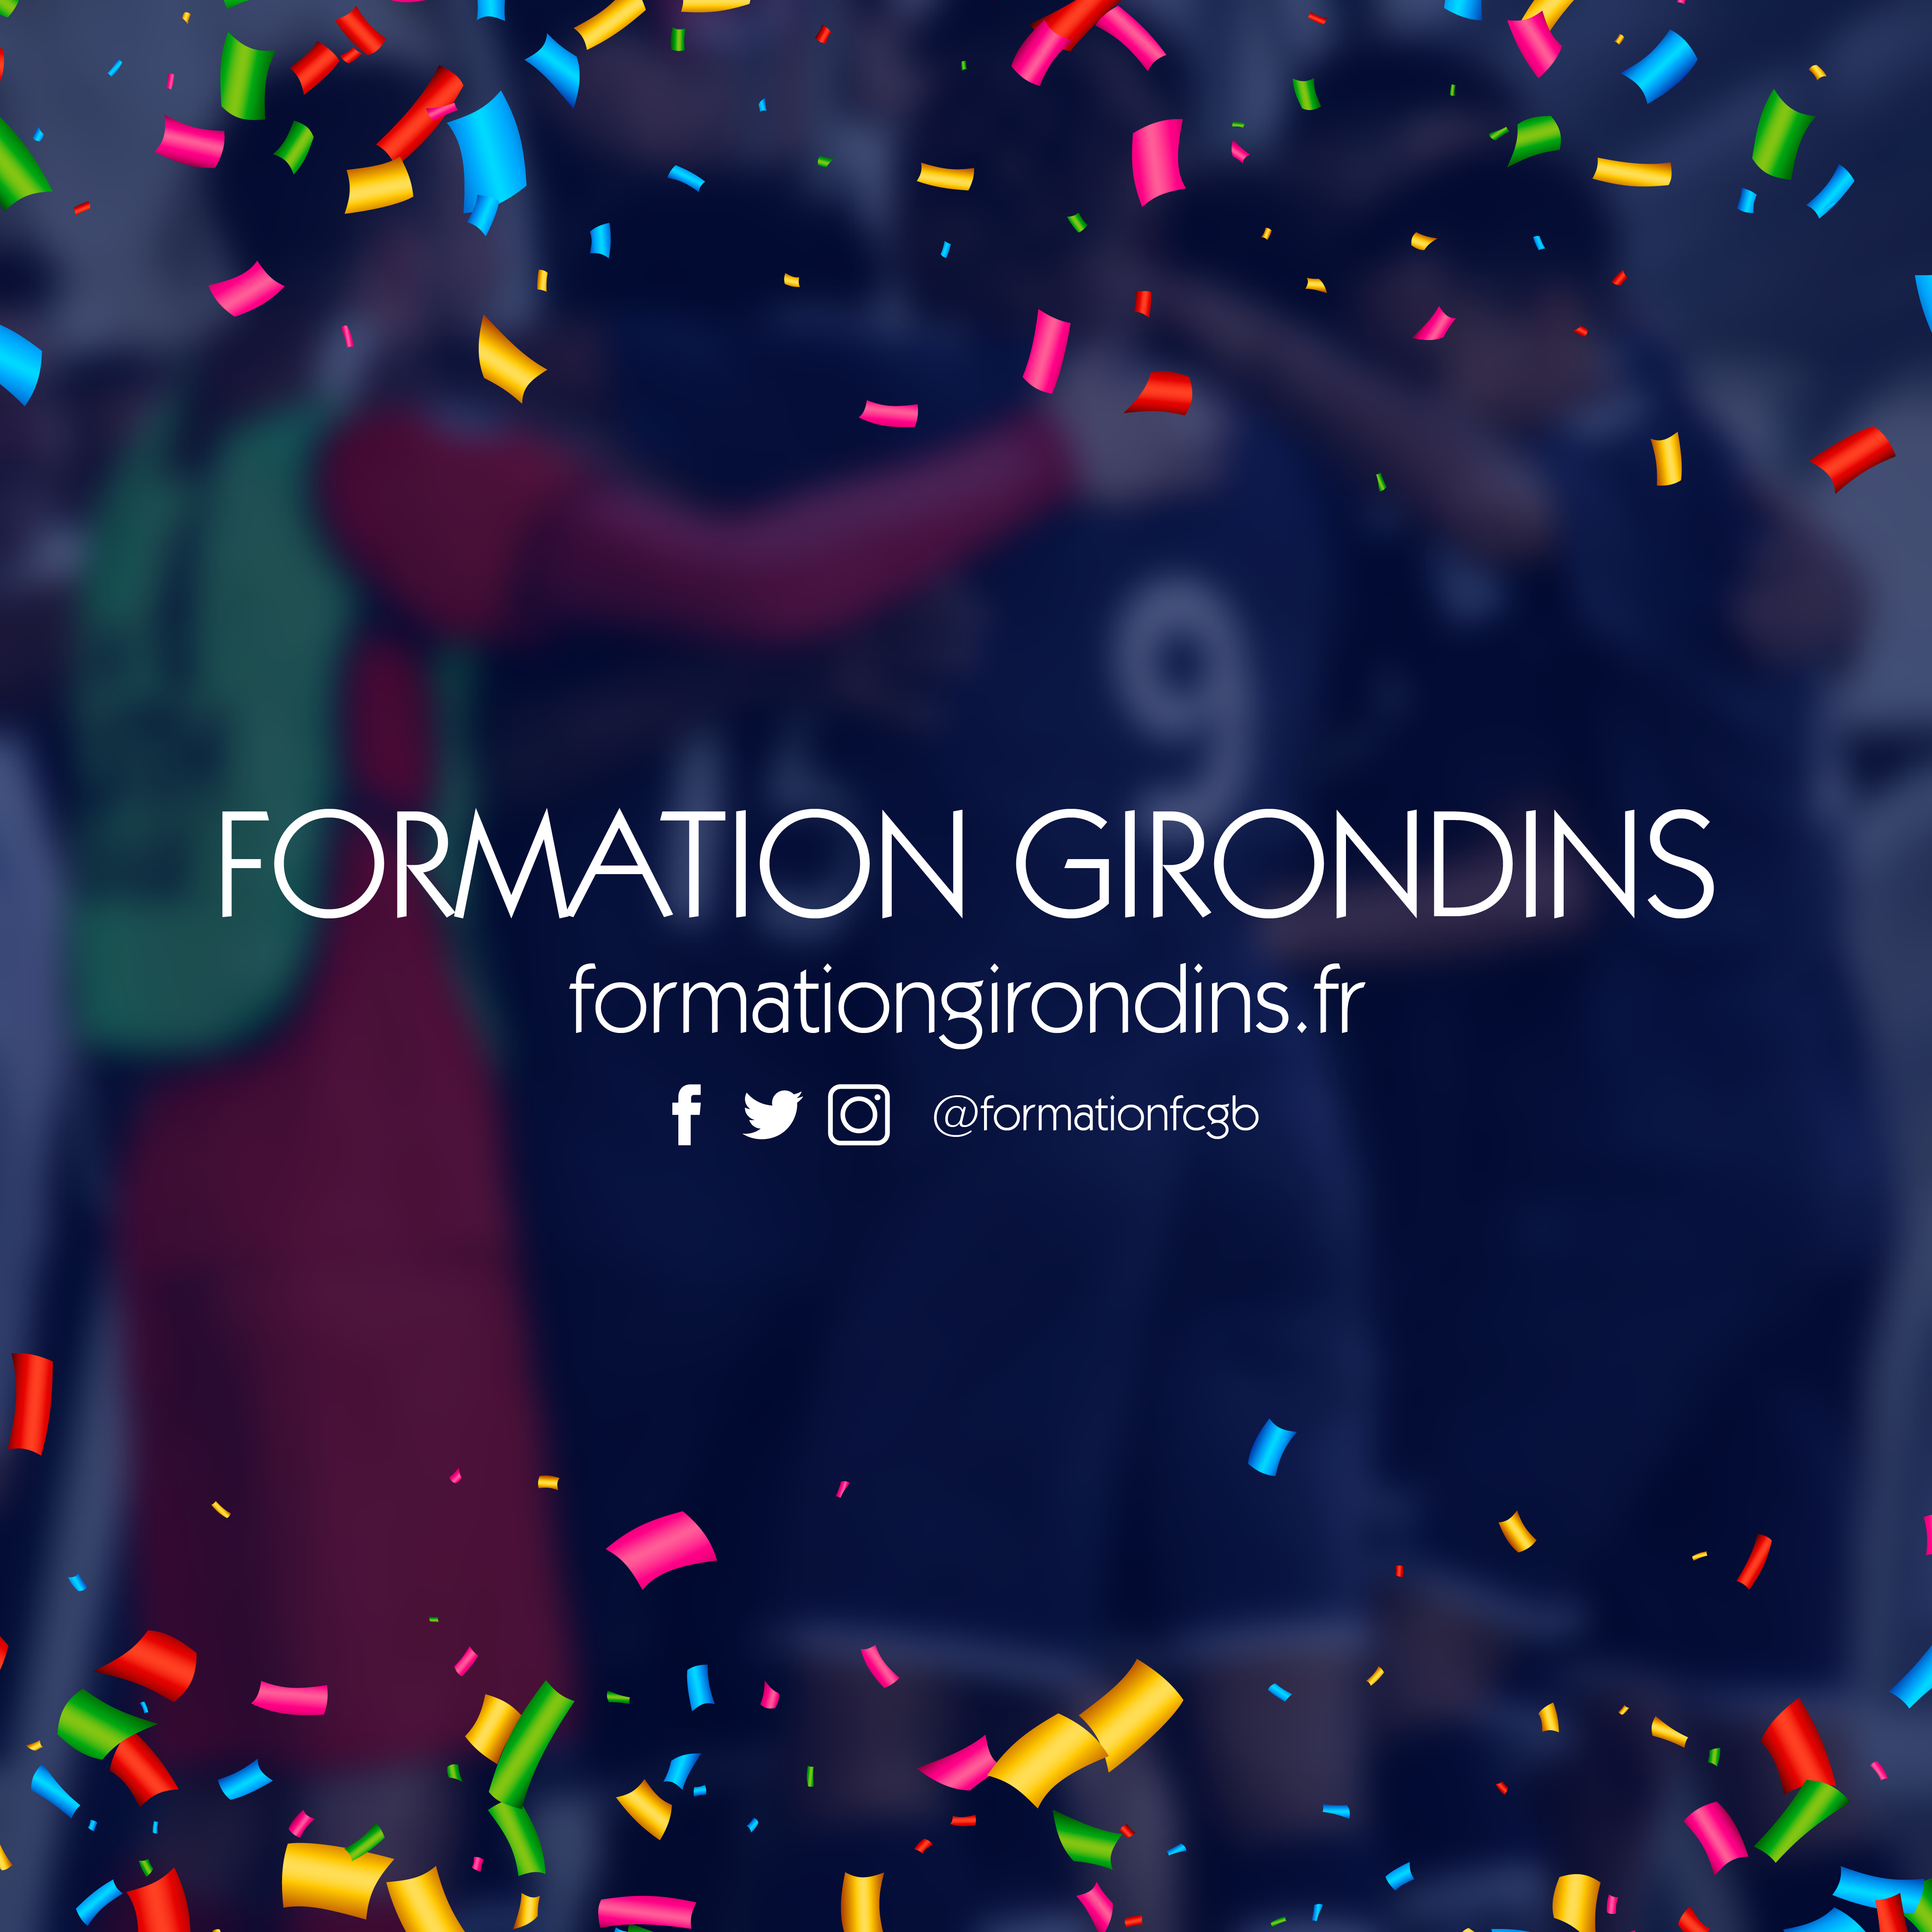 Cfa Girondins : Formation Girondins a 7 ans ! - Formation Girondins 